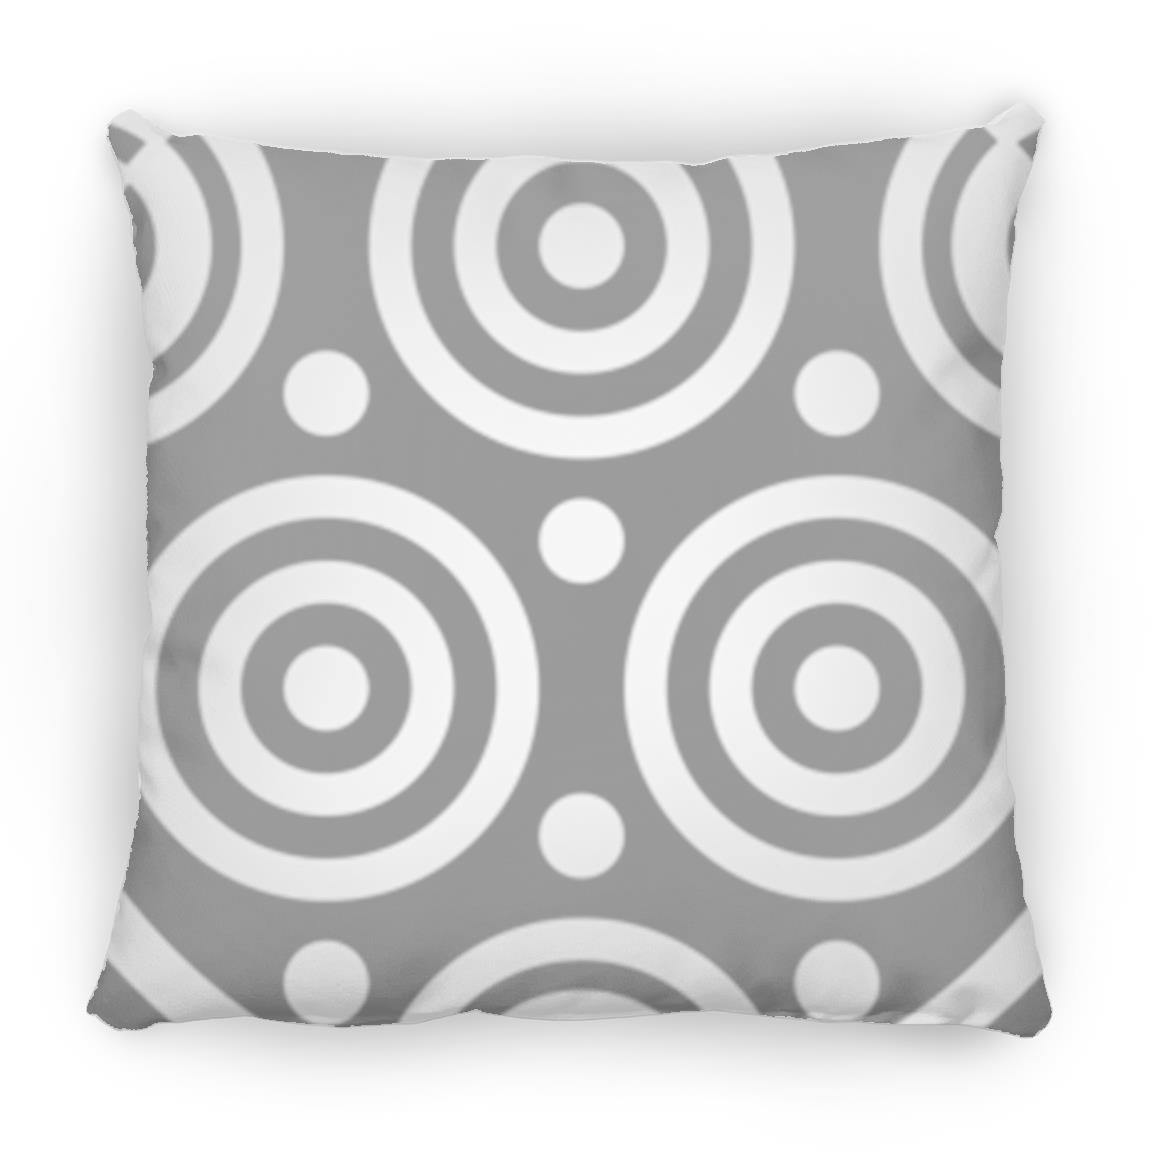 Crop Circle Pillow - Etchilhampton 3 - Shapes of Wisdom